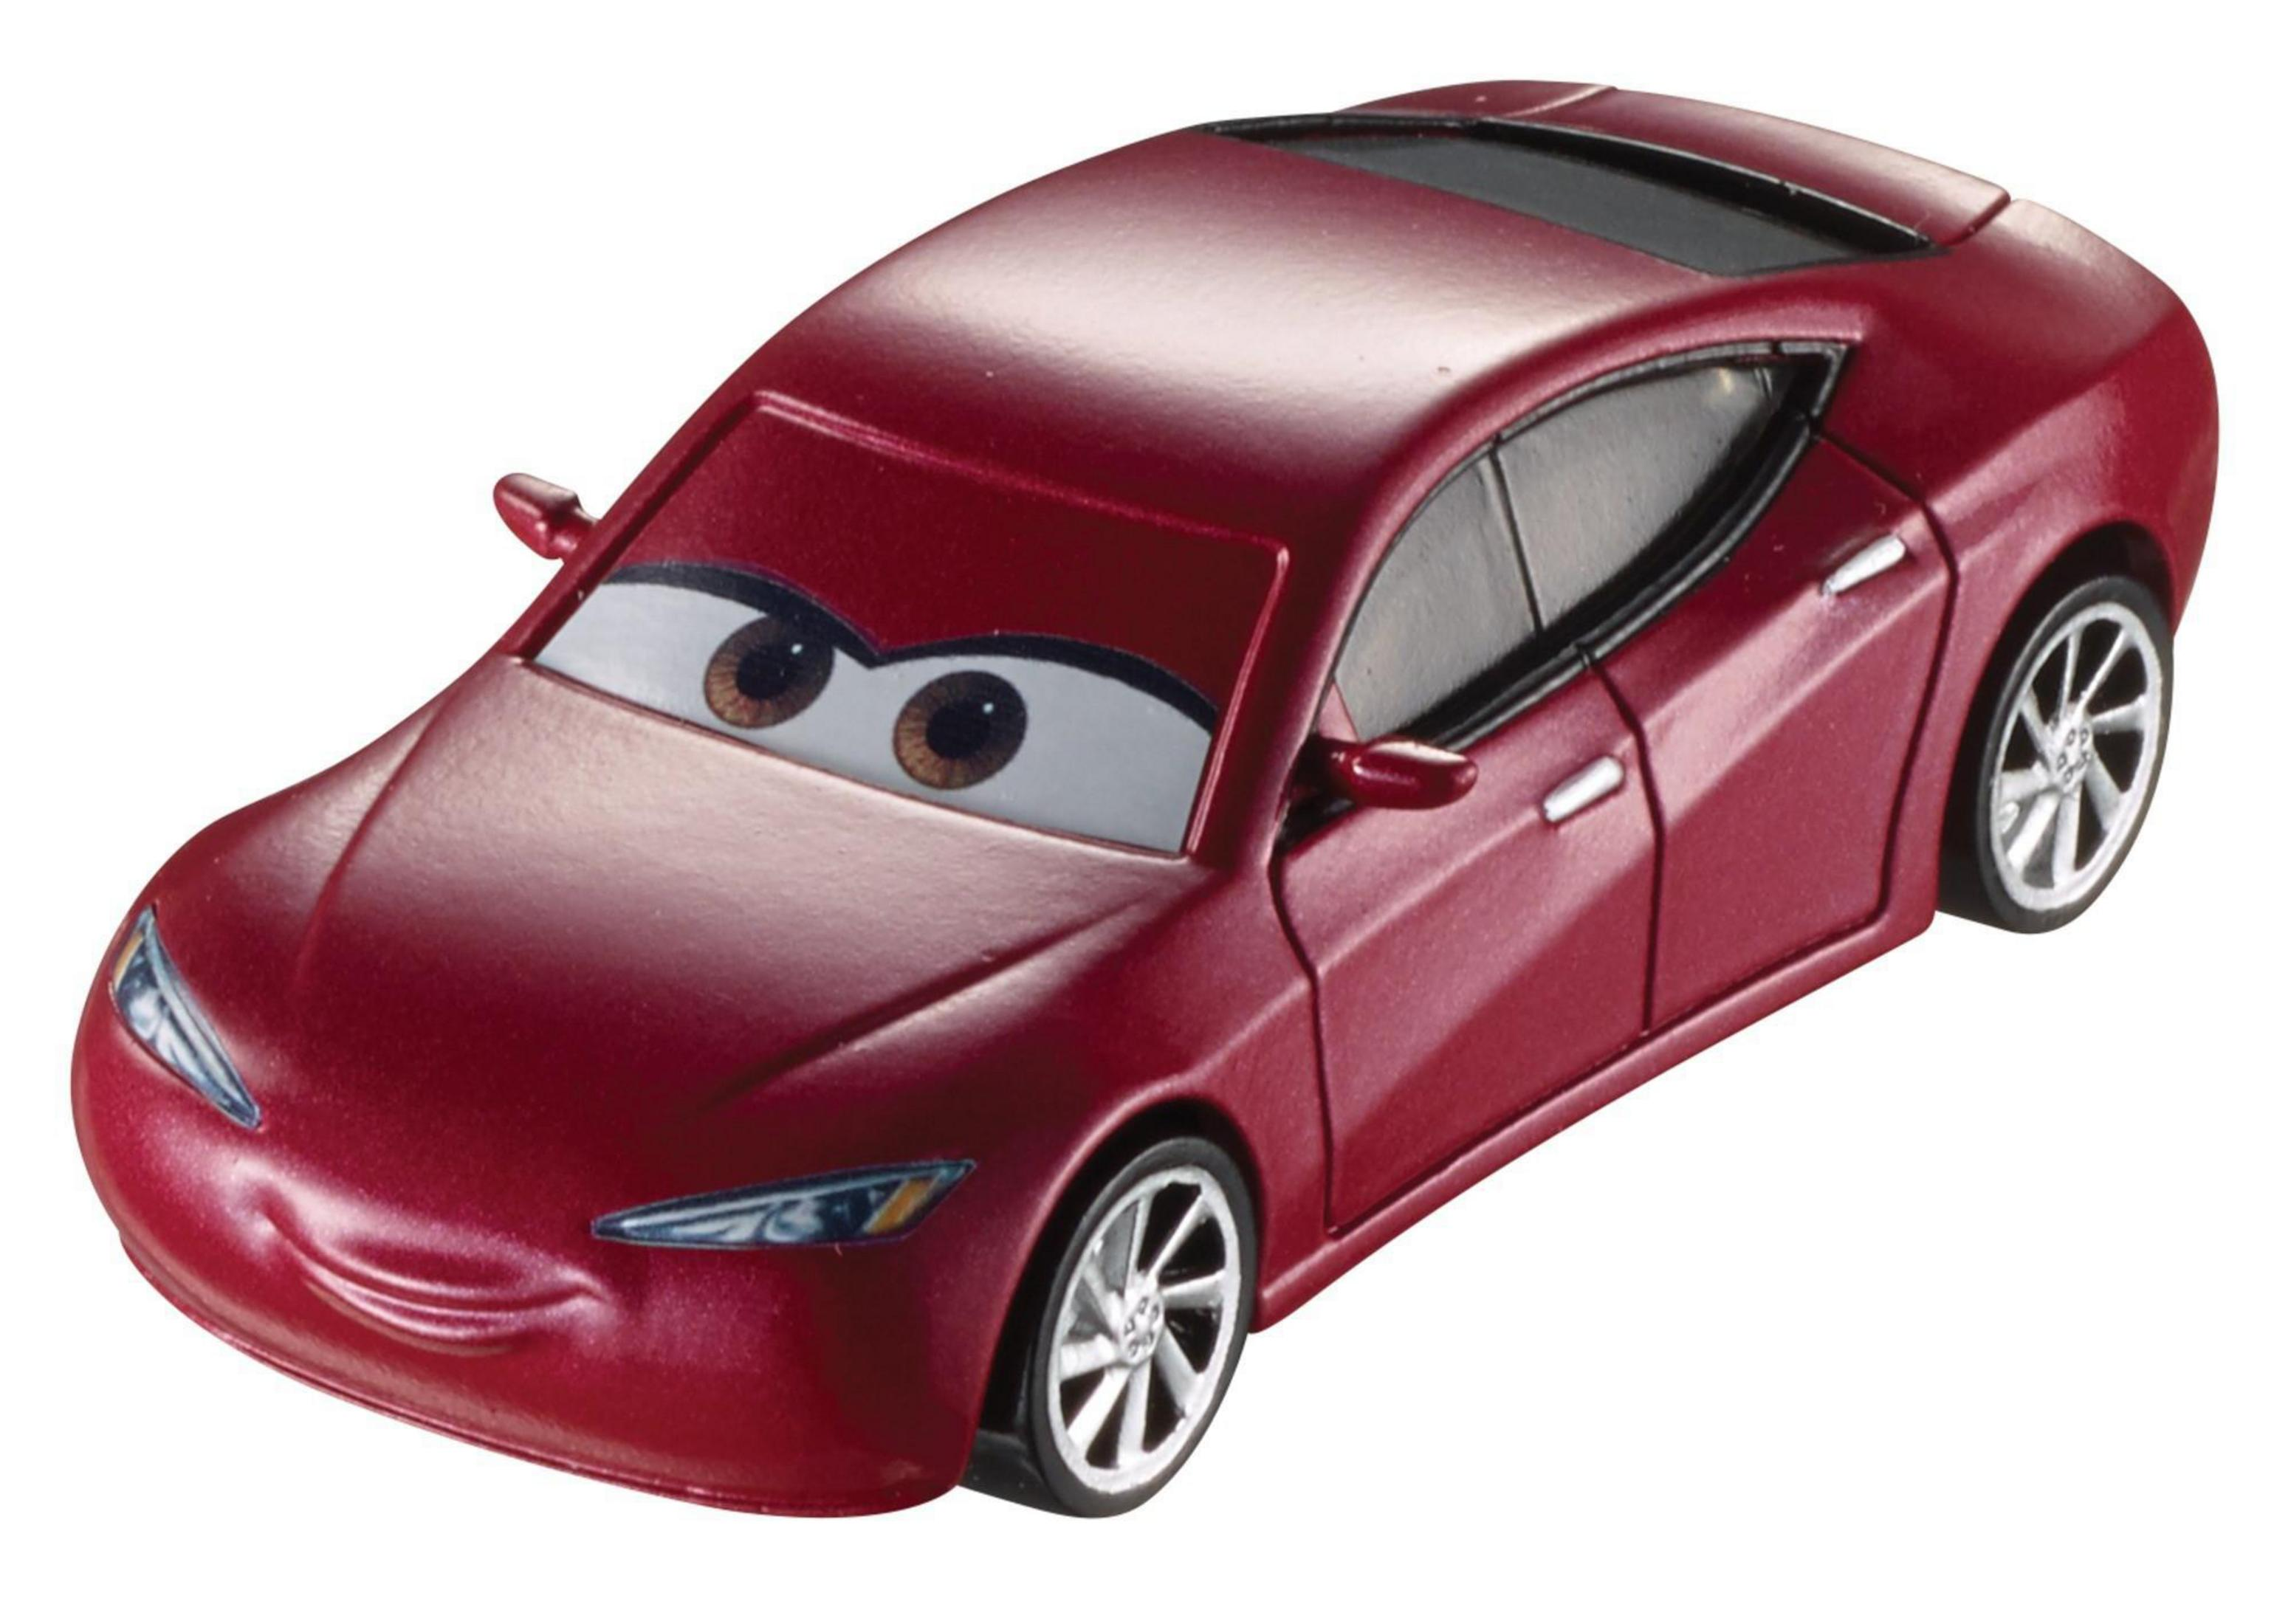 GKB48 SORT Spielzeugauto CHARACTER Mehrfarbig FAHRZEUG DIE-CAST CARS